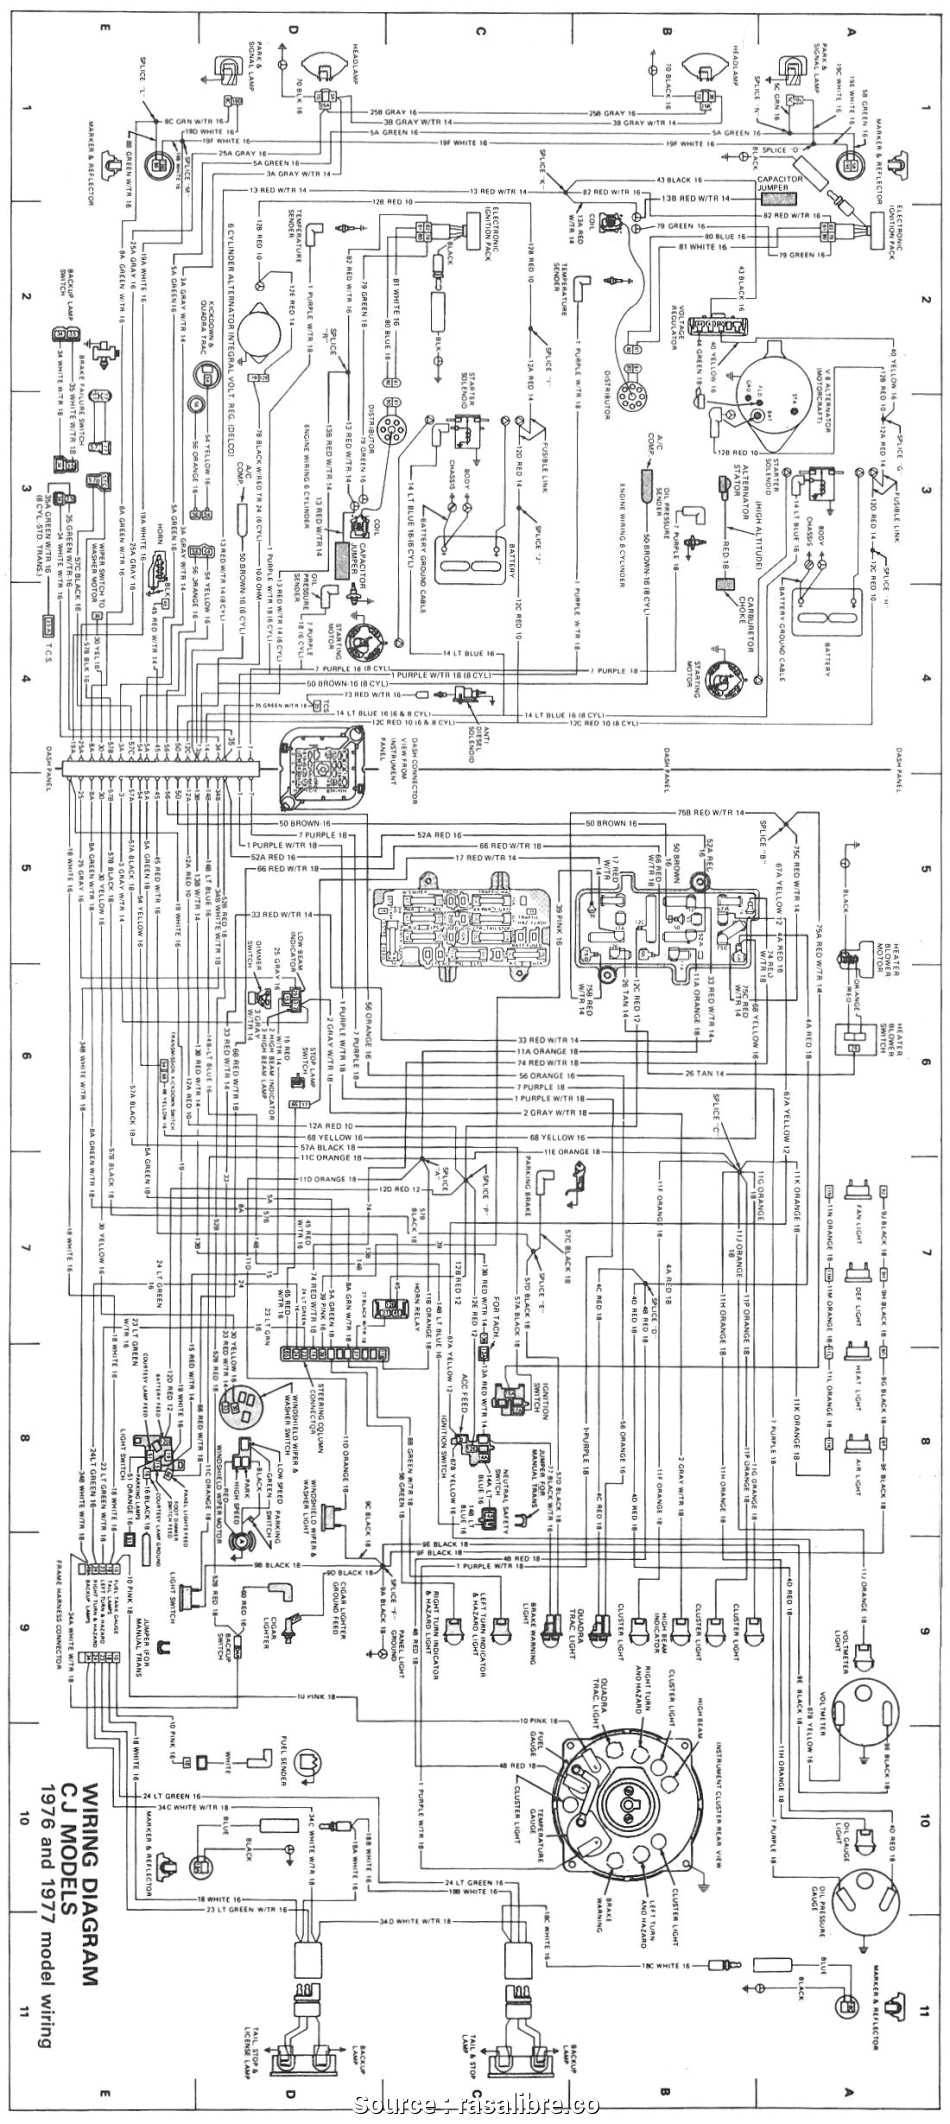 1979 jeep cj5 ignition wiring wiring diagram details 79 jeep cj5 wiring diagram